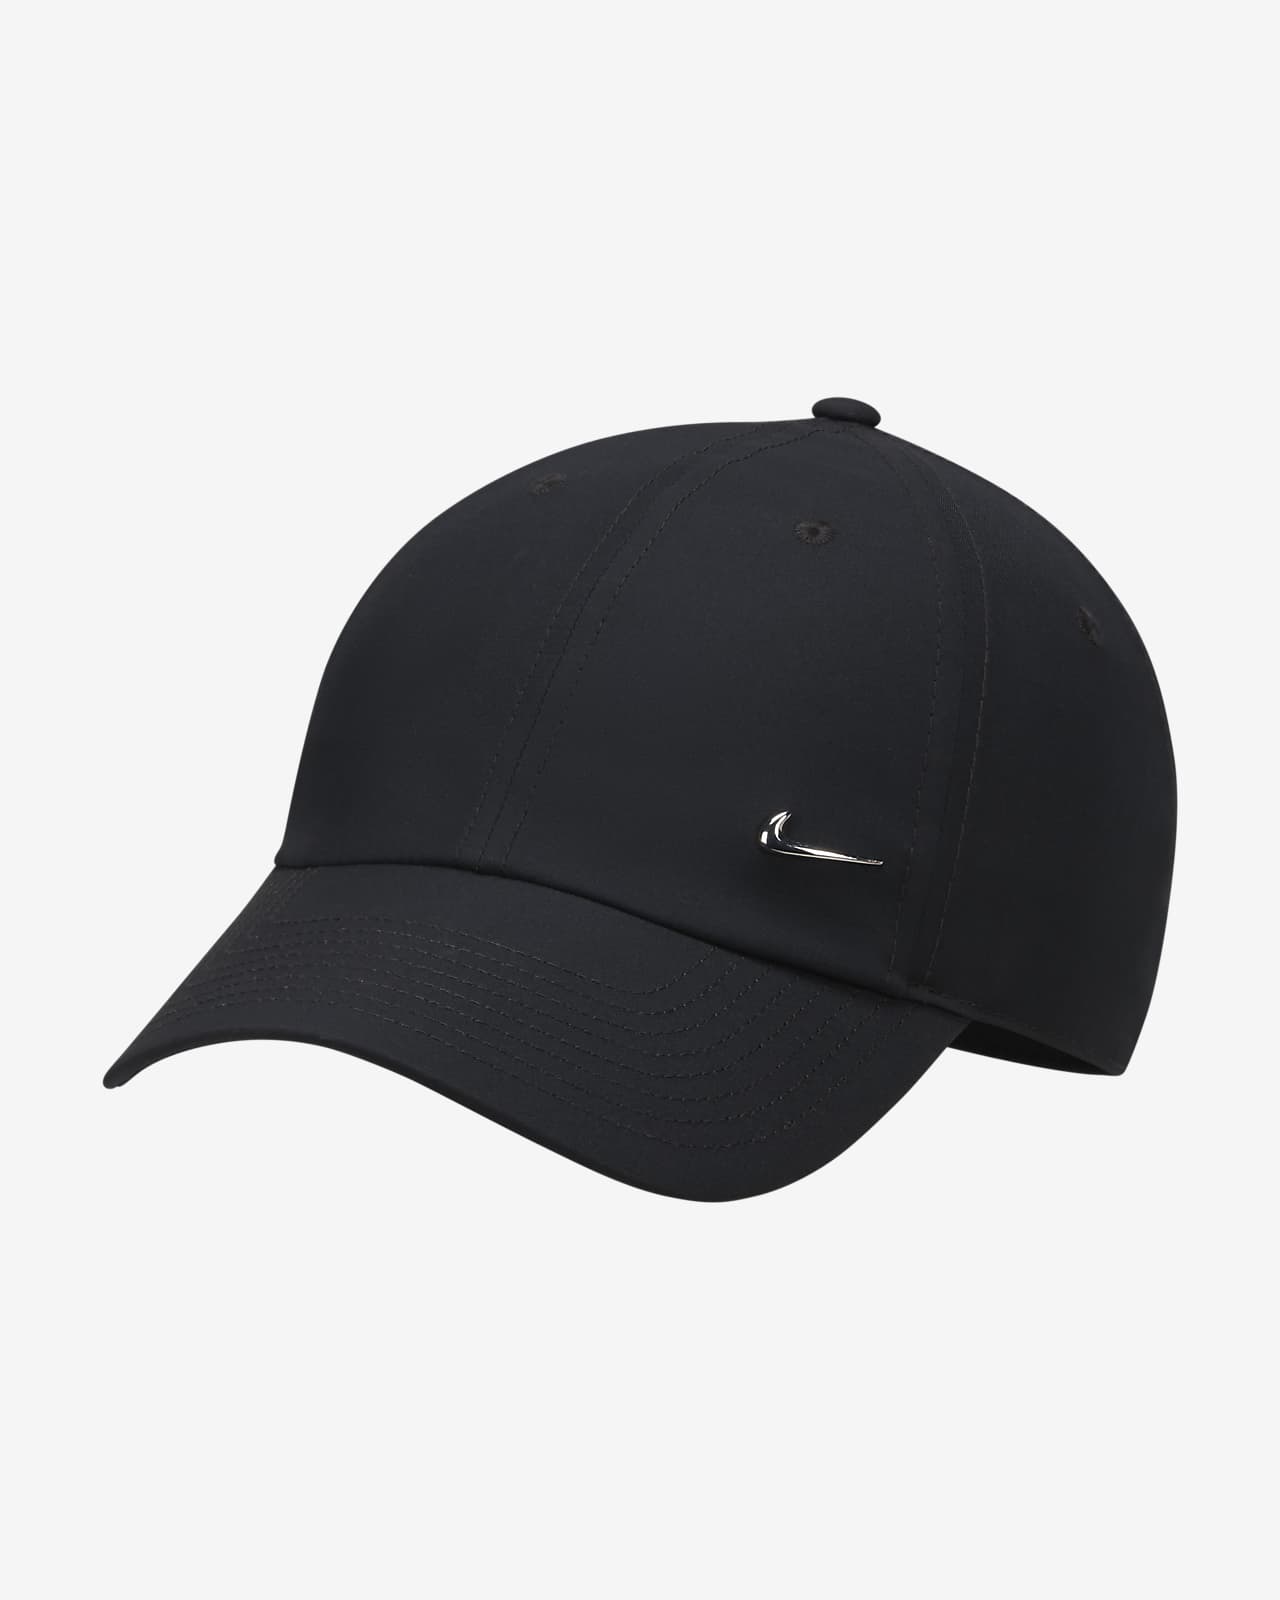 Nike Dri-FIT Club Gorra sin estructura con logotipo Swoosh metálico